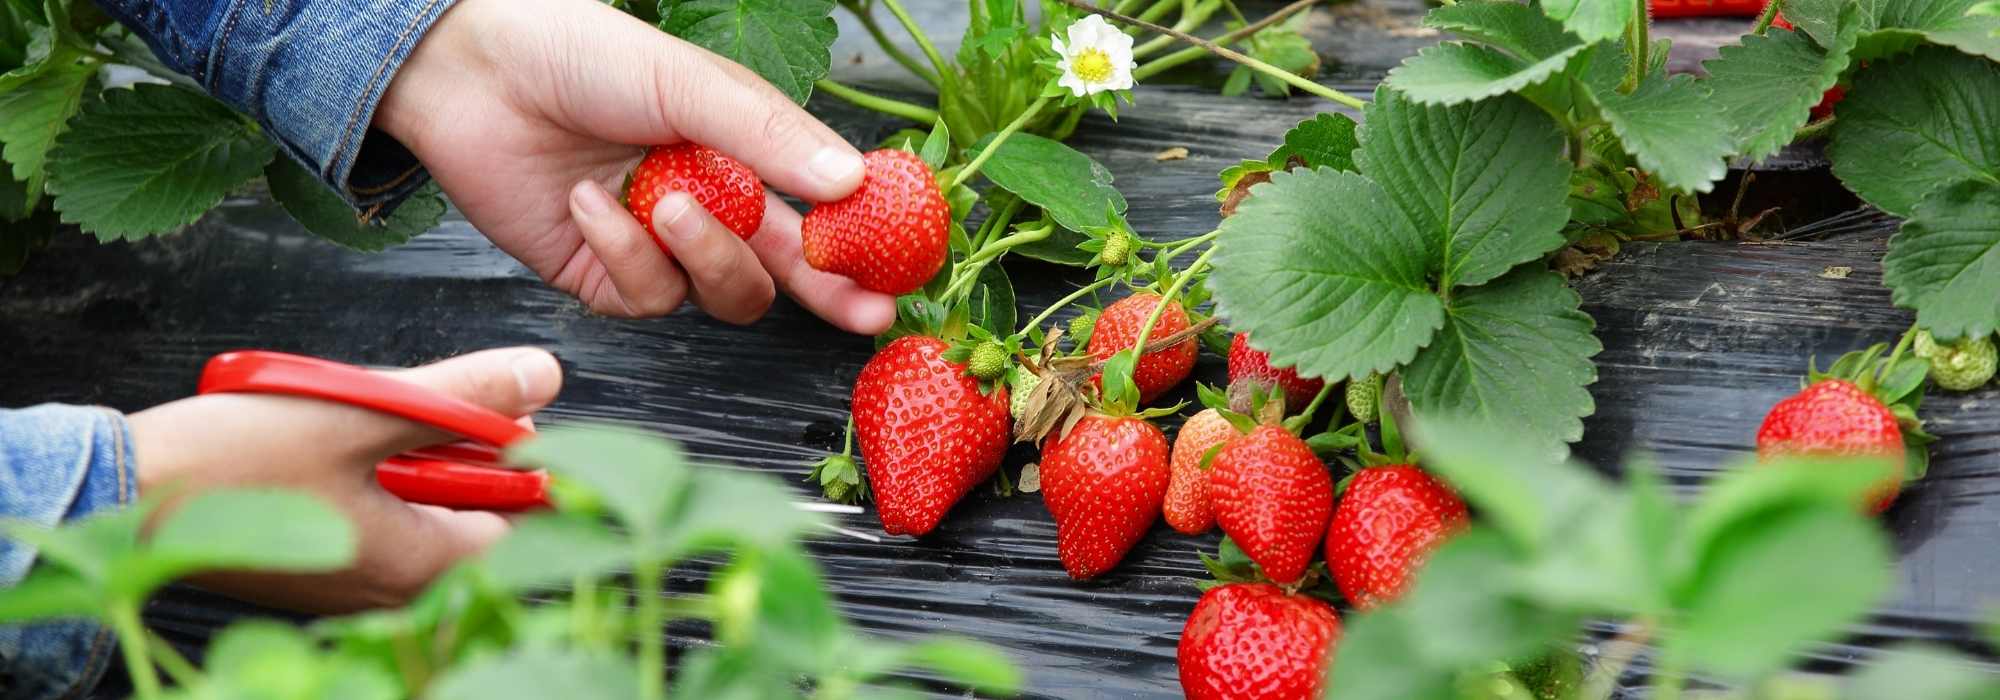 Choisir des fraisiers